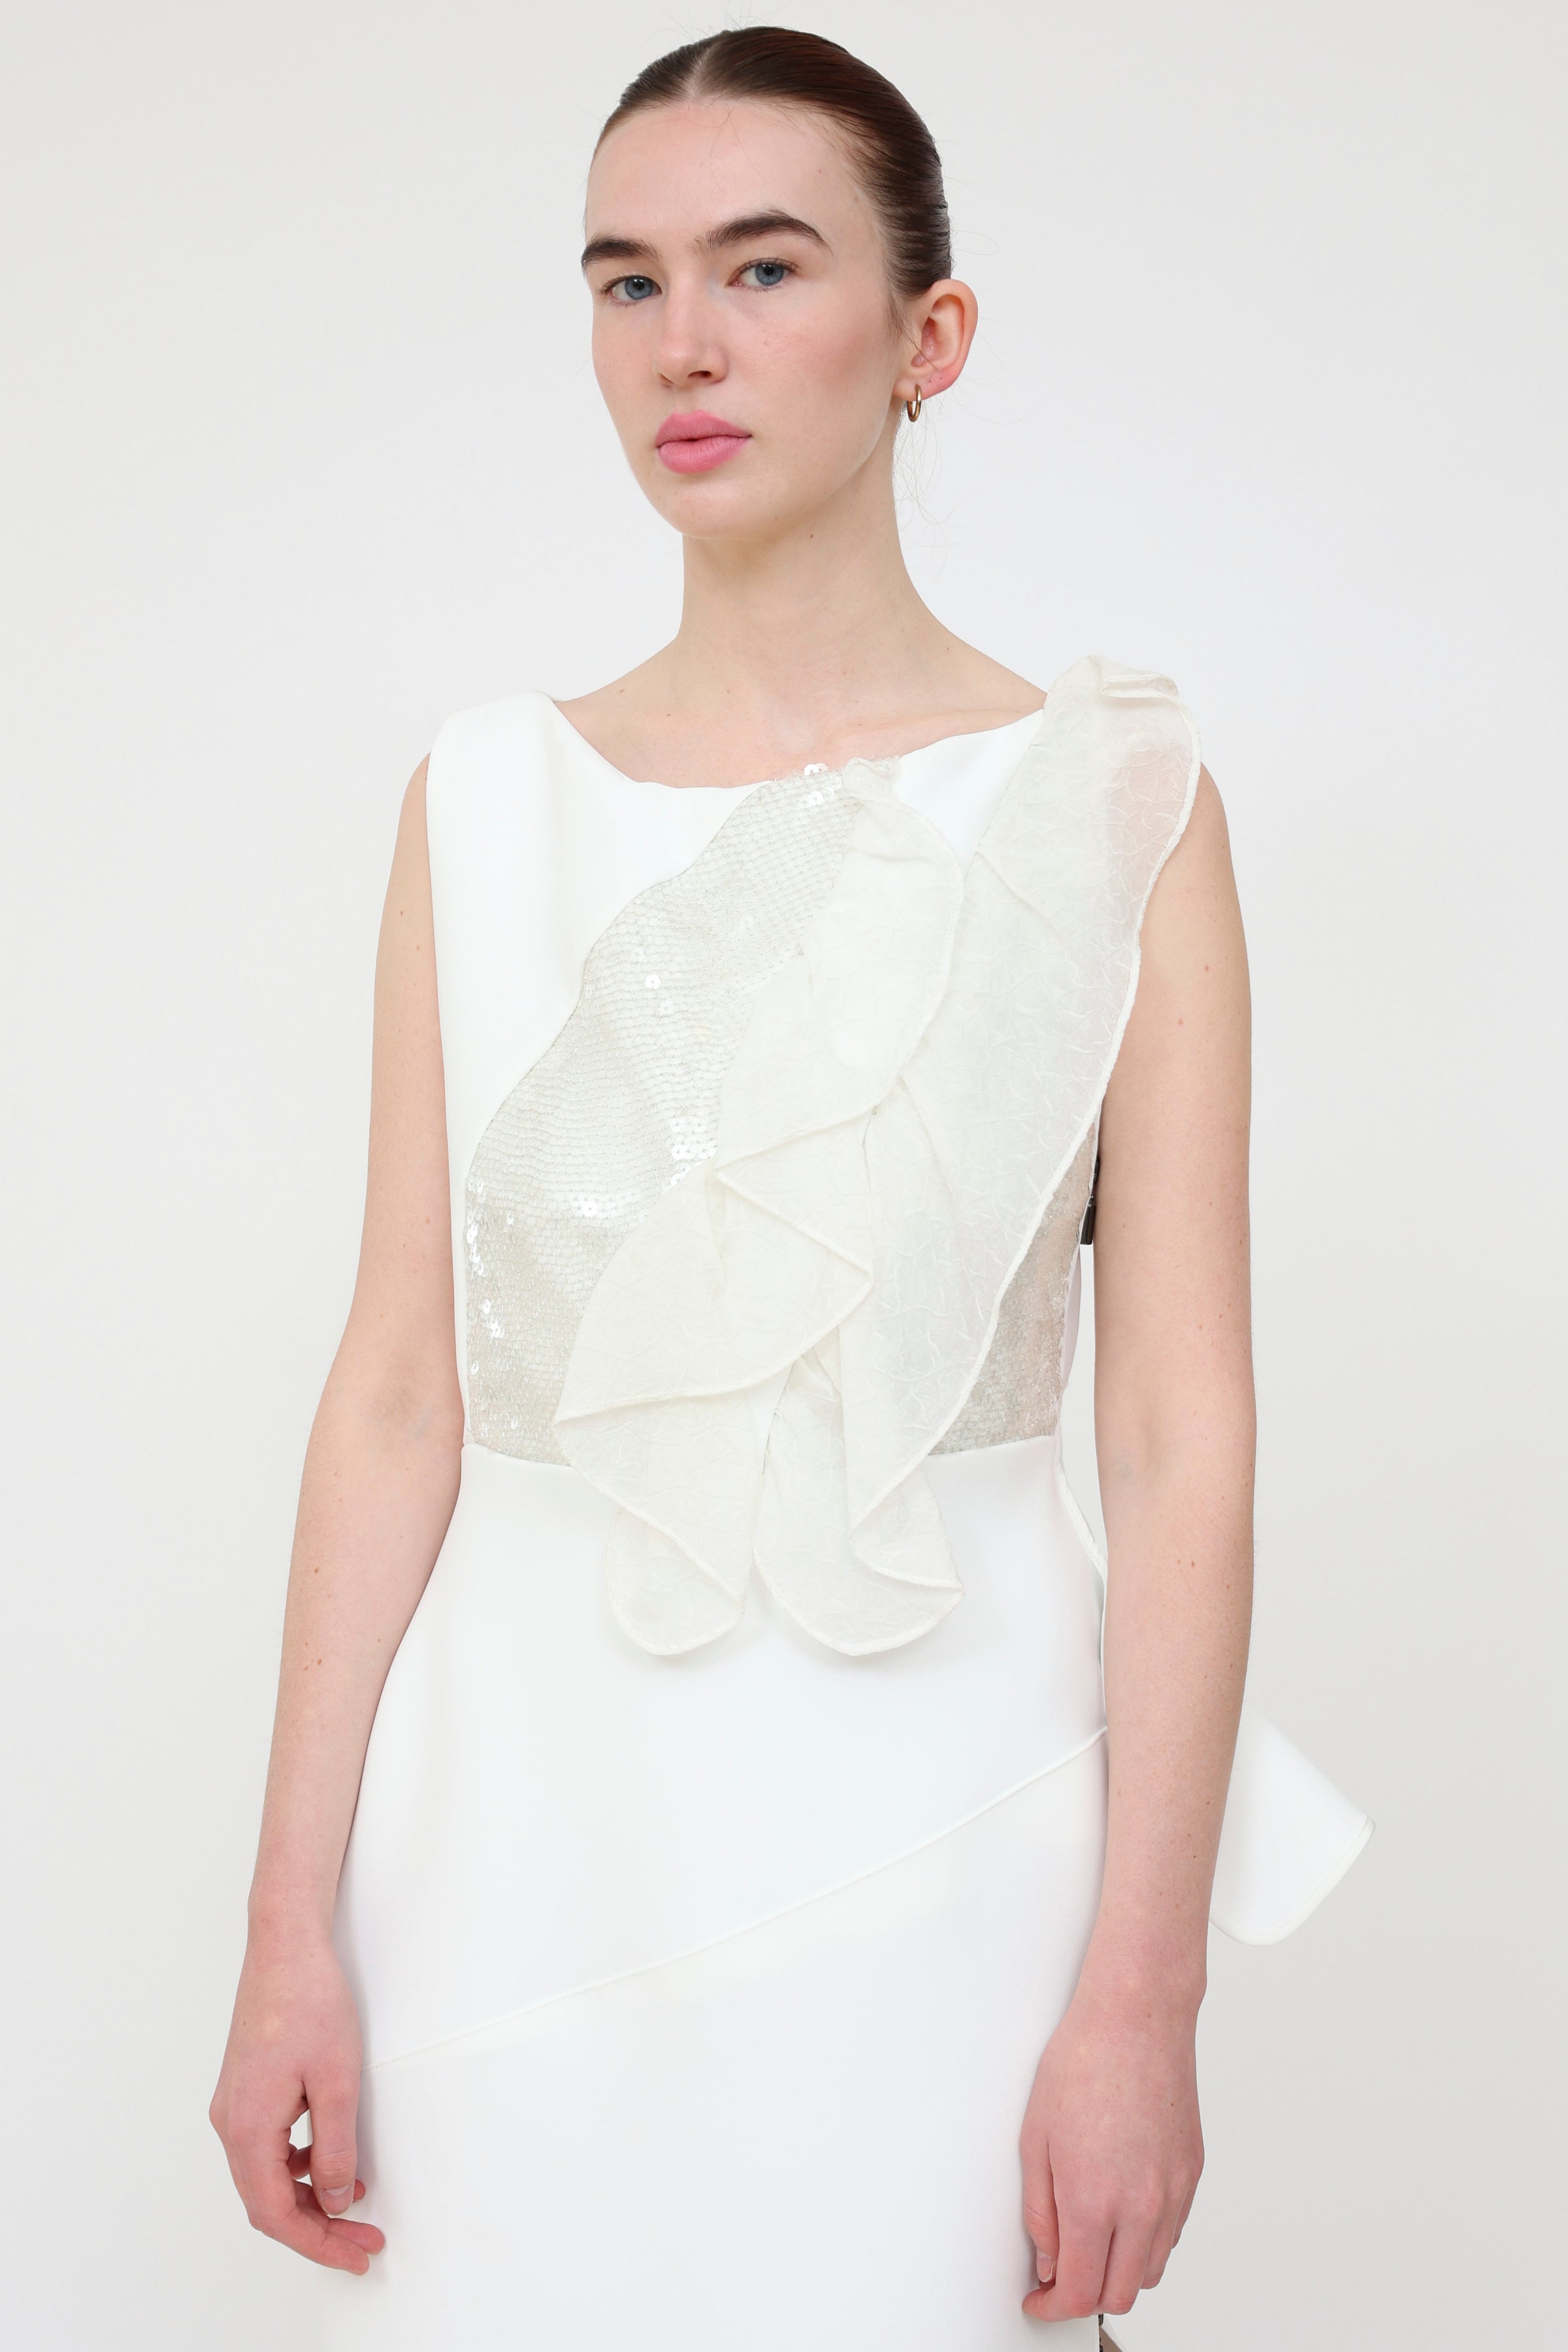 Toni Maticevski Present Gown New Wedding Dress | New wedding dresses, Gowns,  Prom dresses gowns